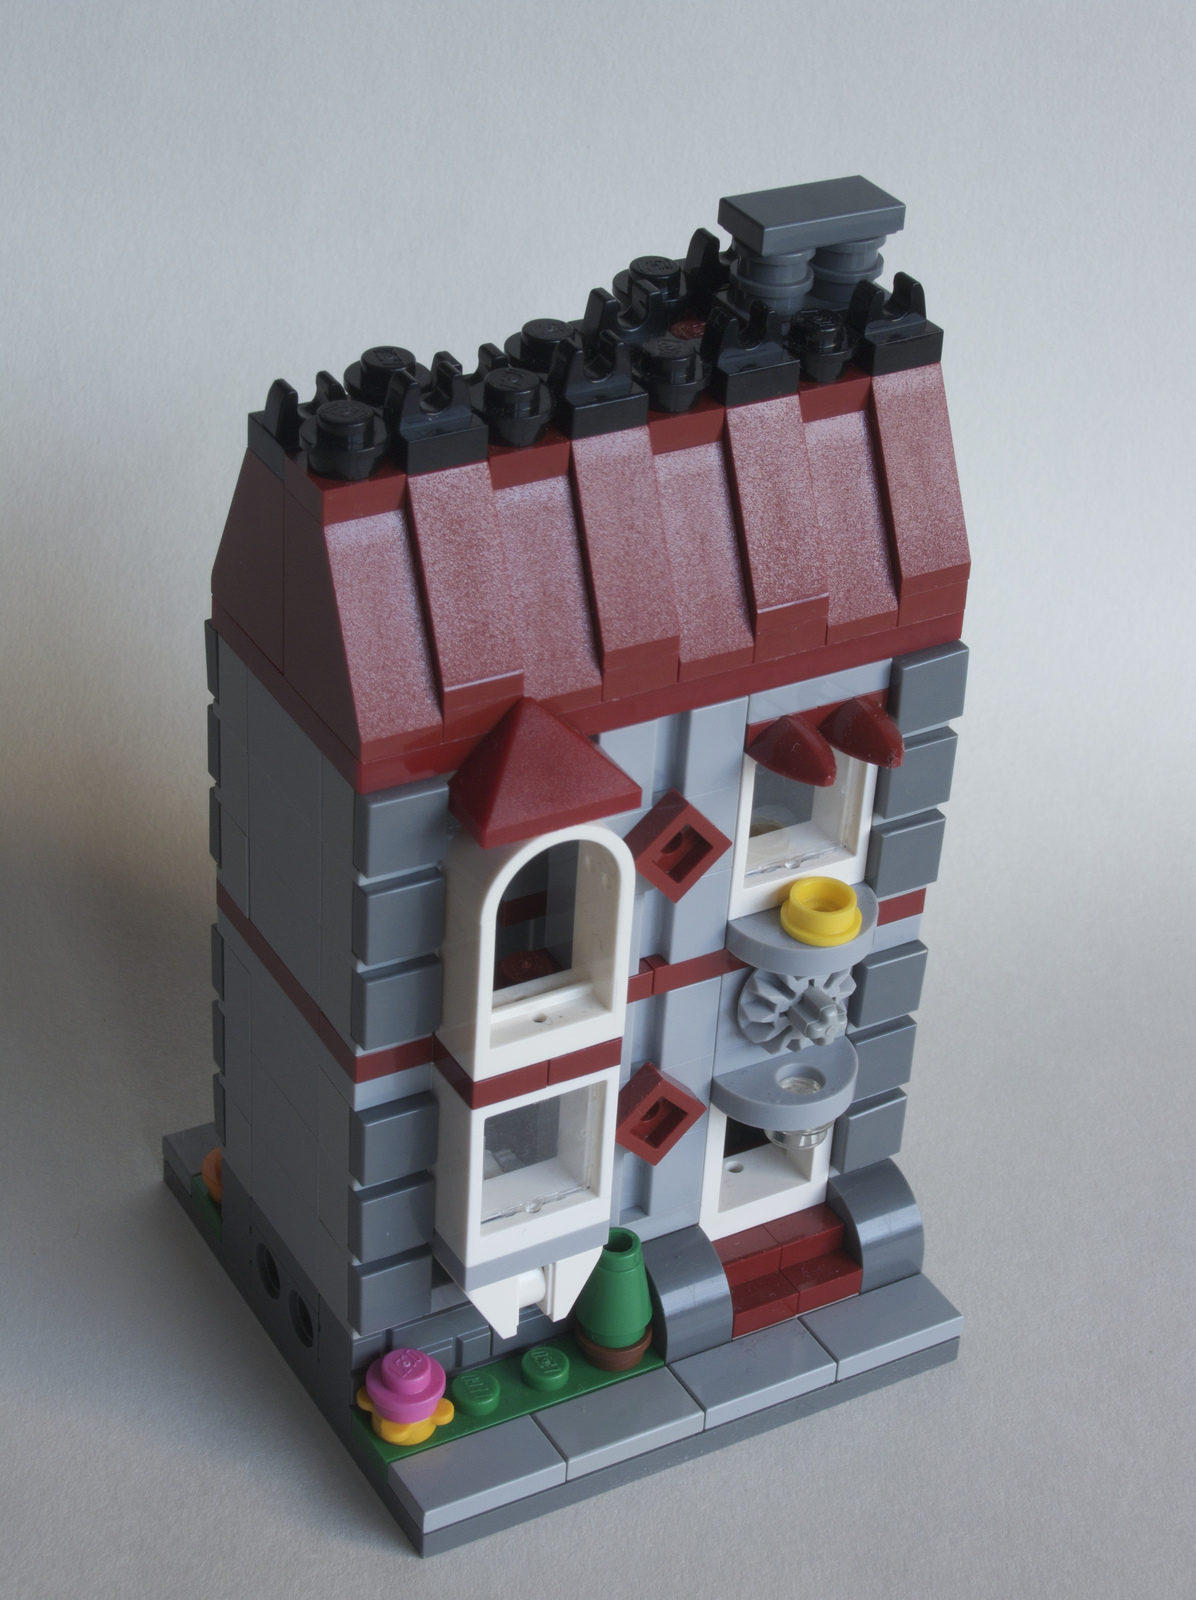 Lego Townhouse | yagodiaz  -  Foter  -  CC BY